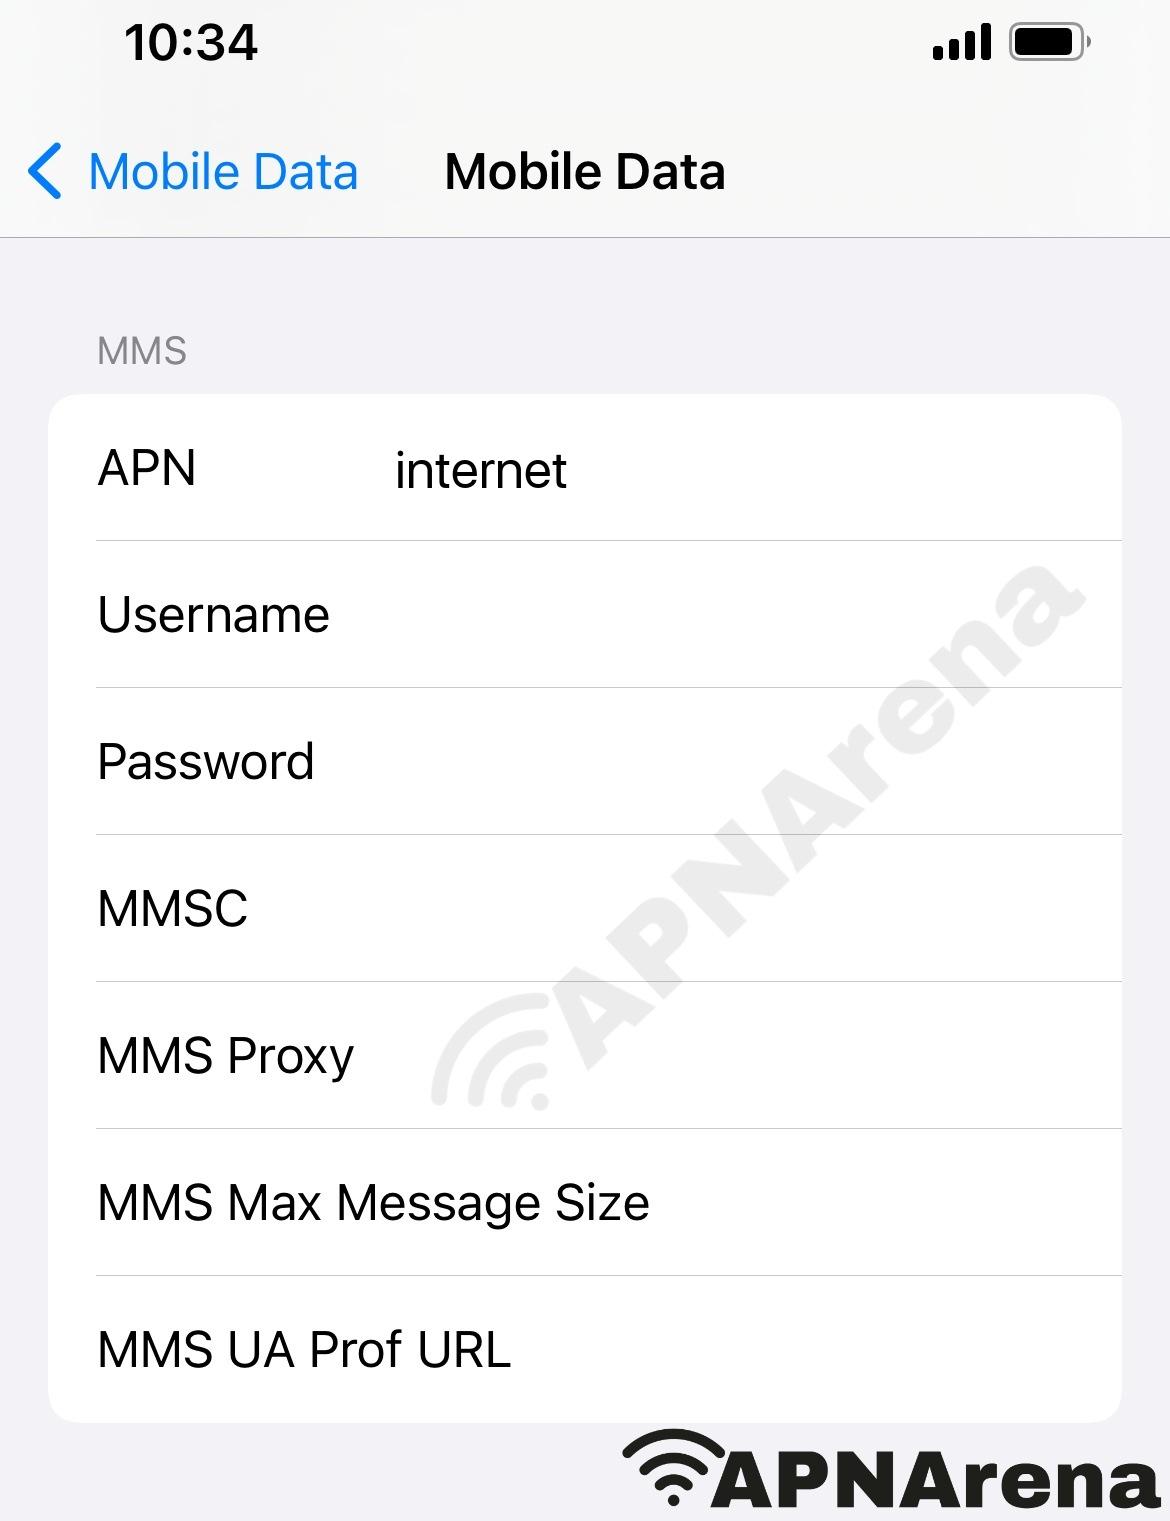 Utility Warehouse-Telecom Plus MMS Settings for iPhone